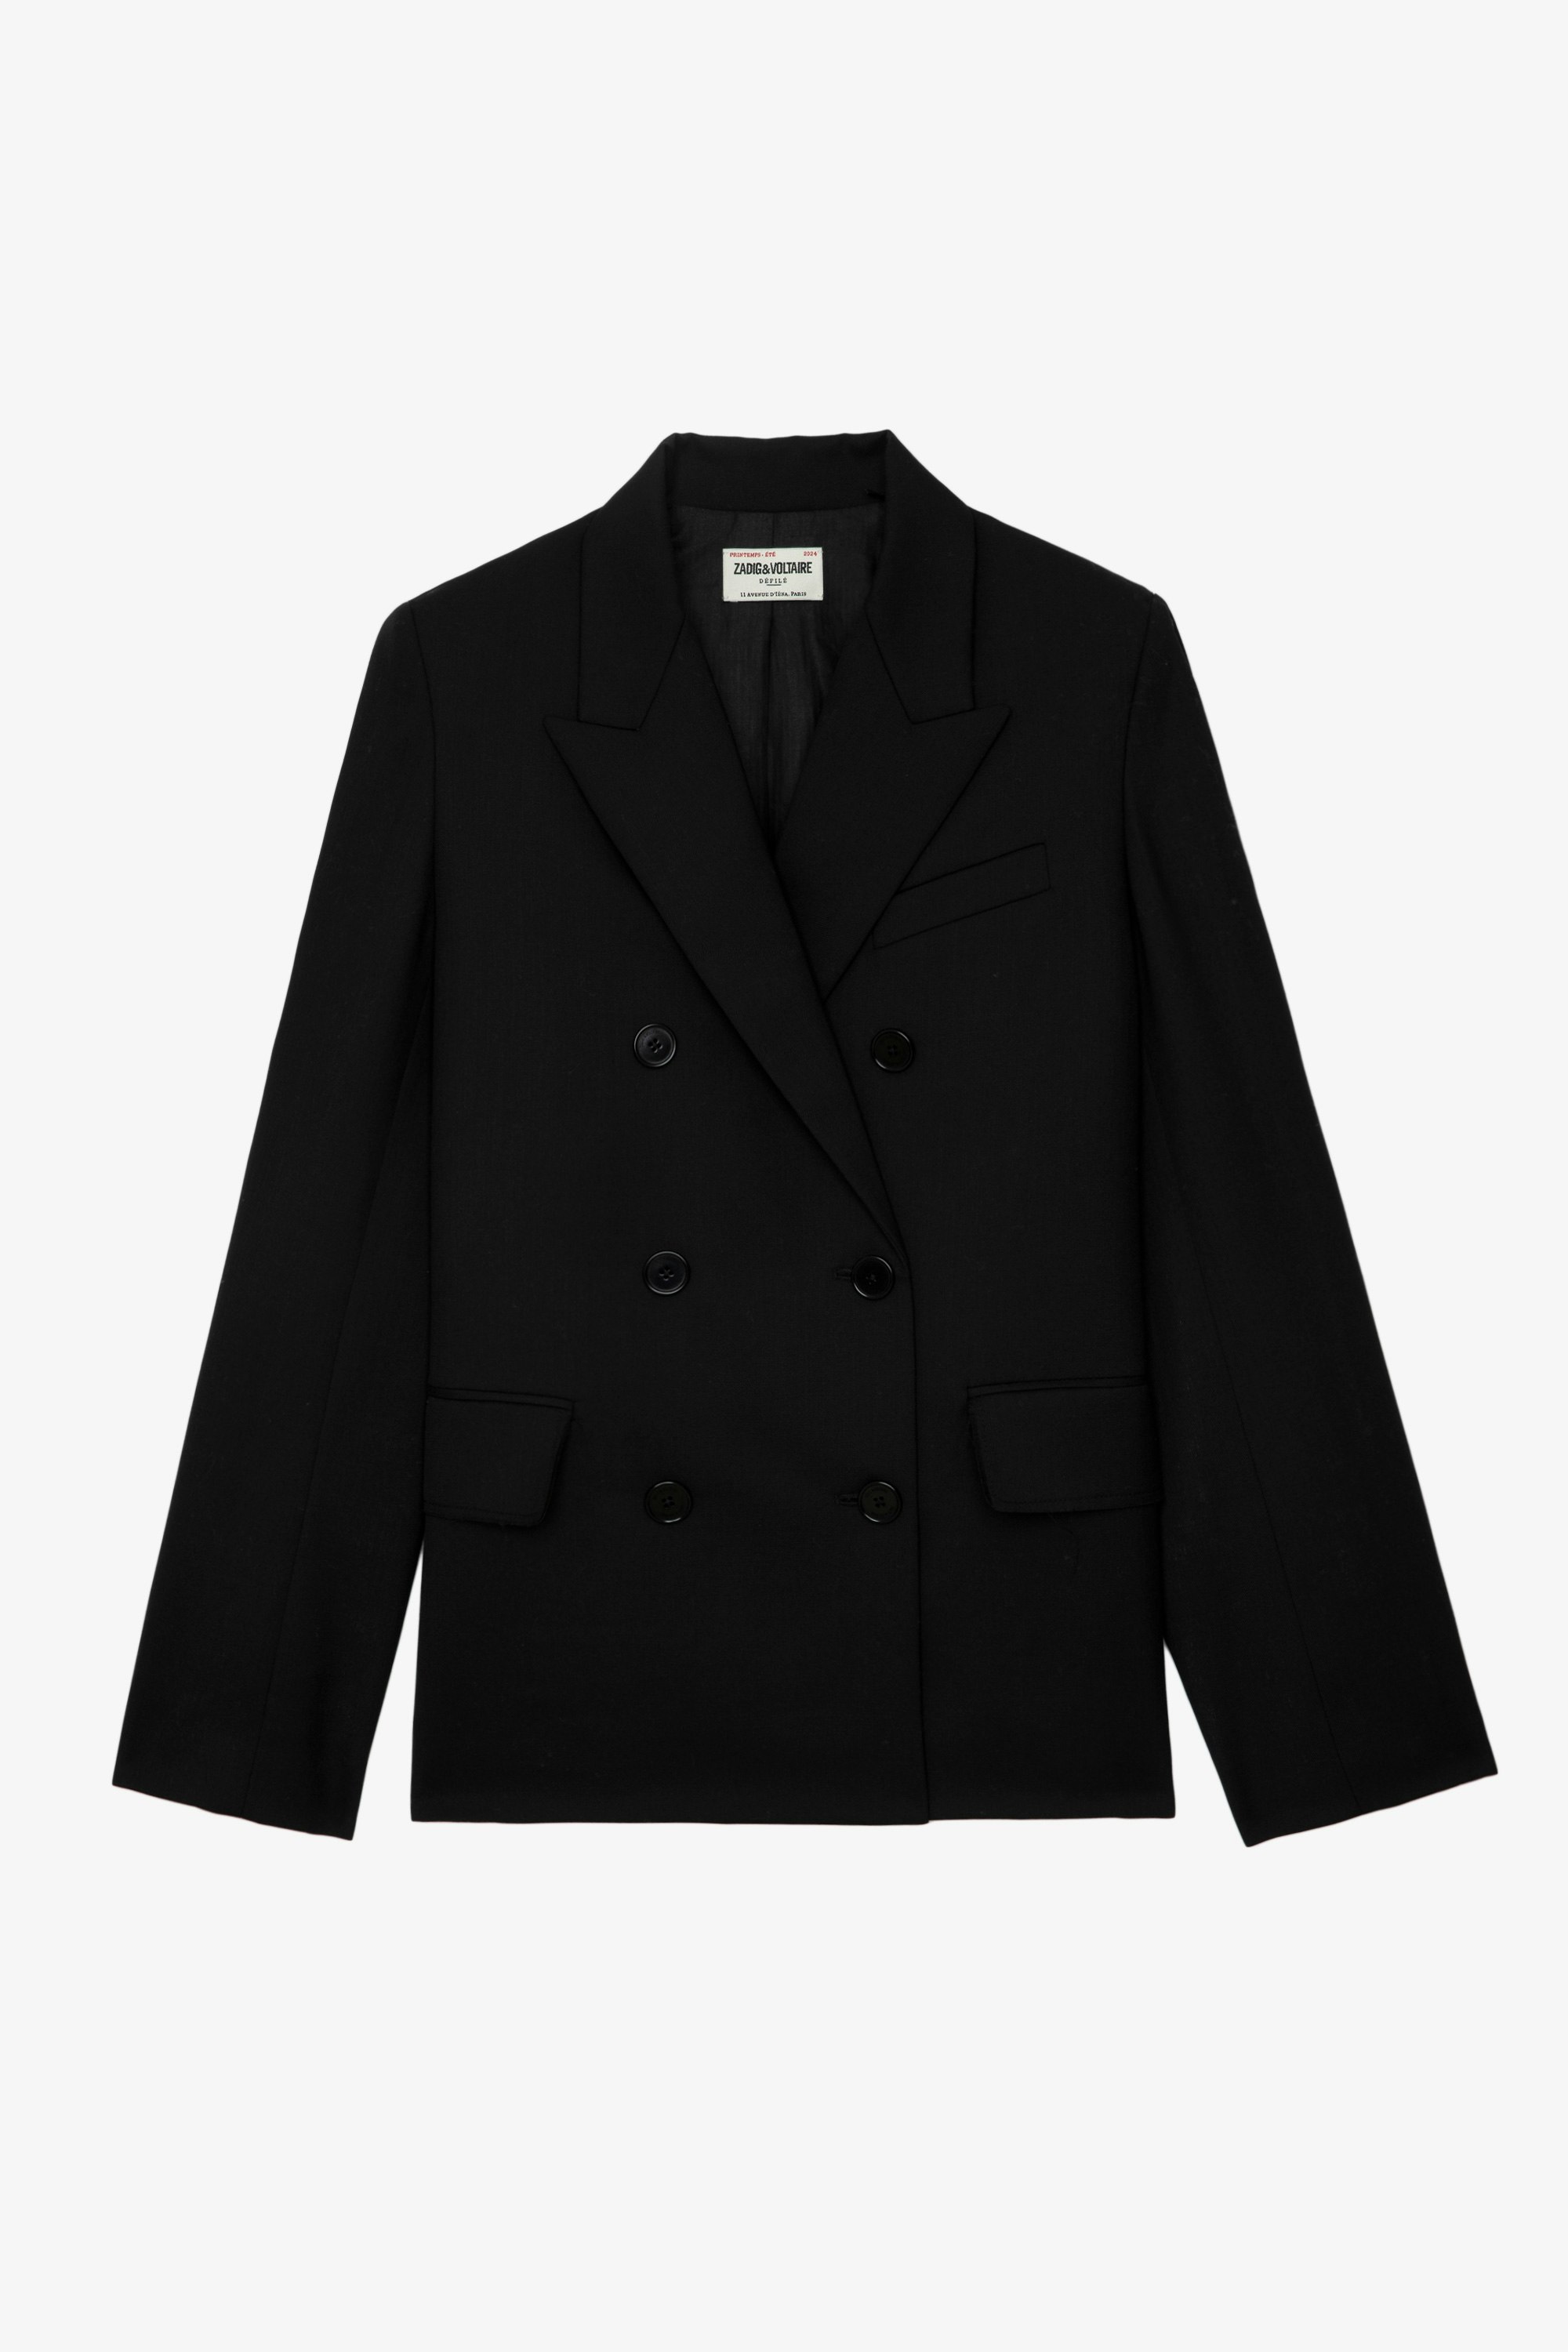 Vaena Blazer - Oversized black wool blazer with tailored collar, button closure and shoulder pads.